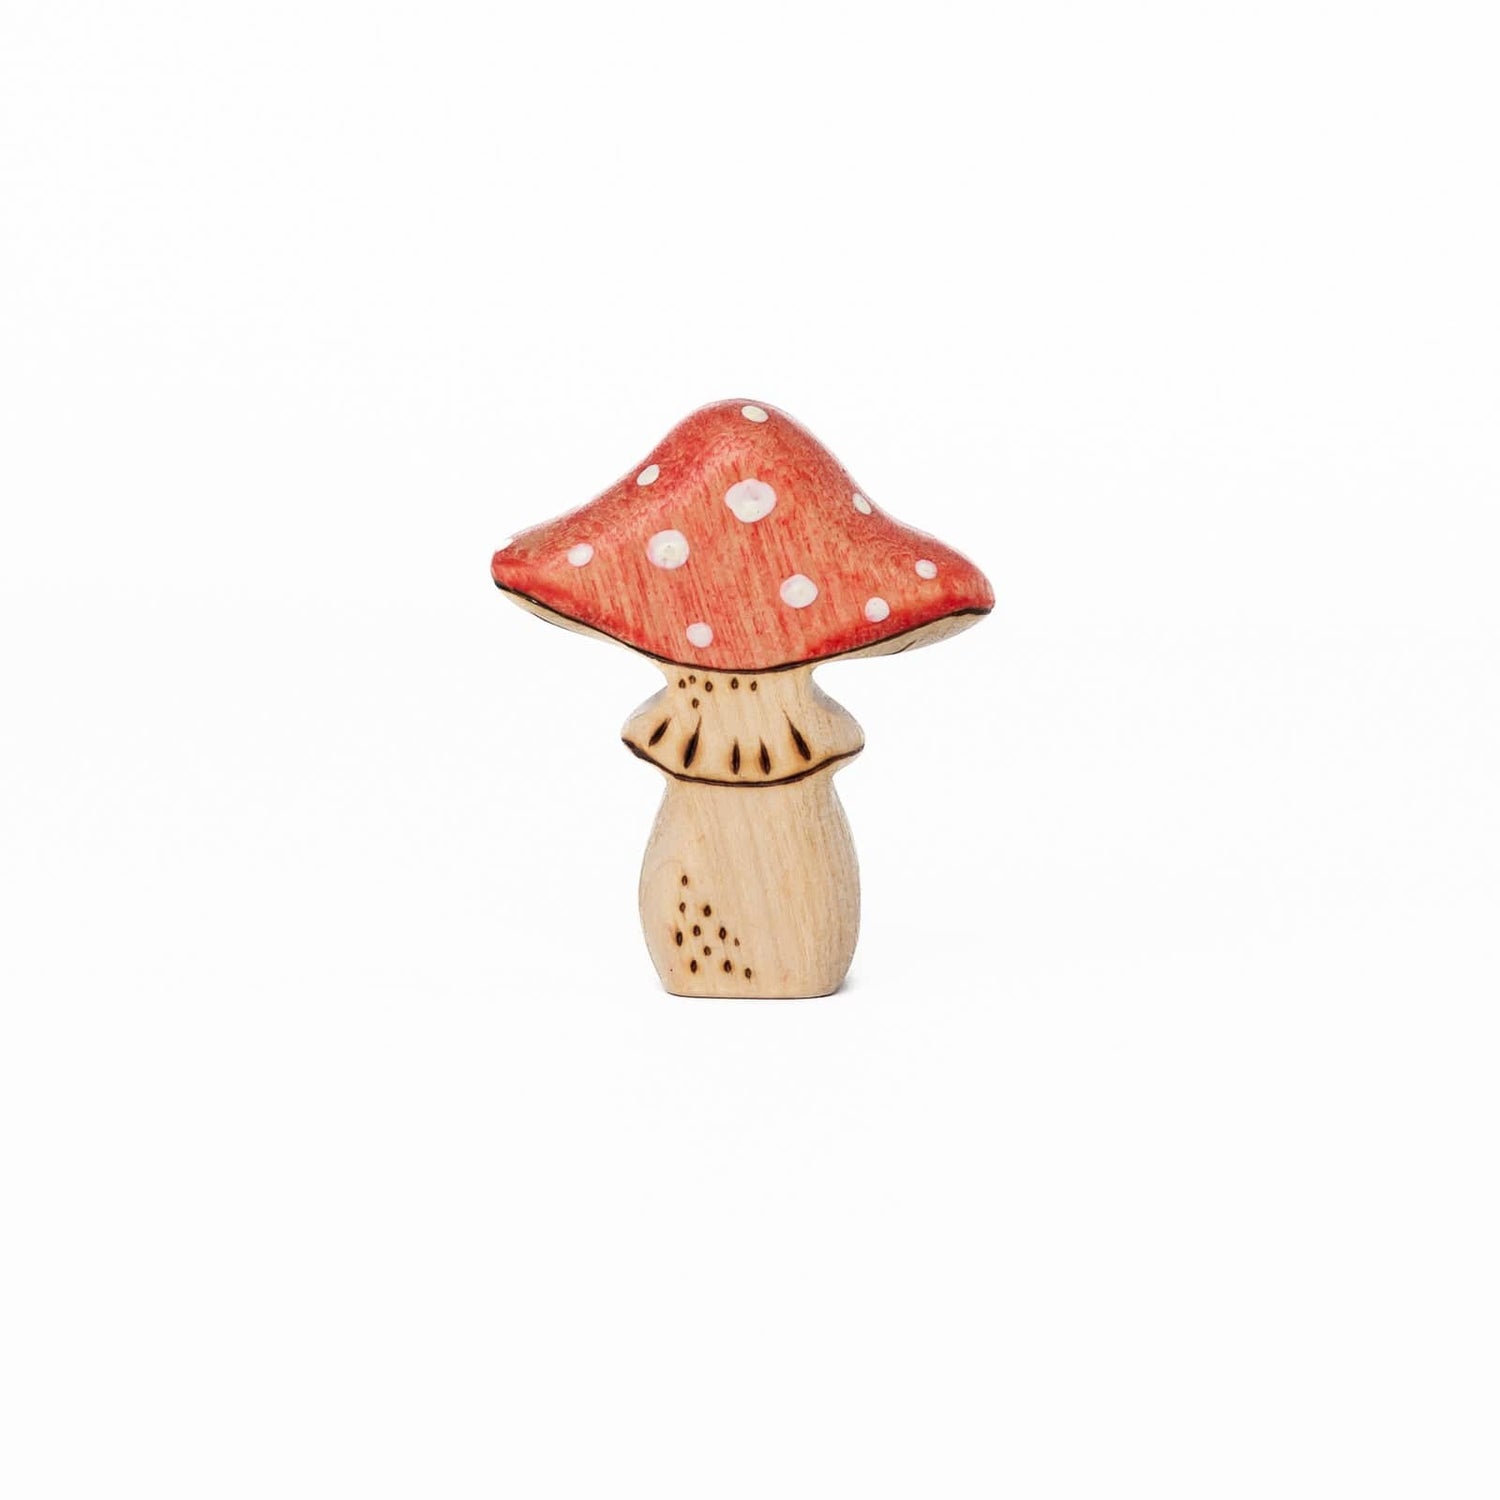 Tiny Fox Hole Wooden Animals Handmade Wooden Amanita (Mushroom) Toy